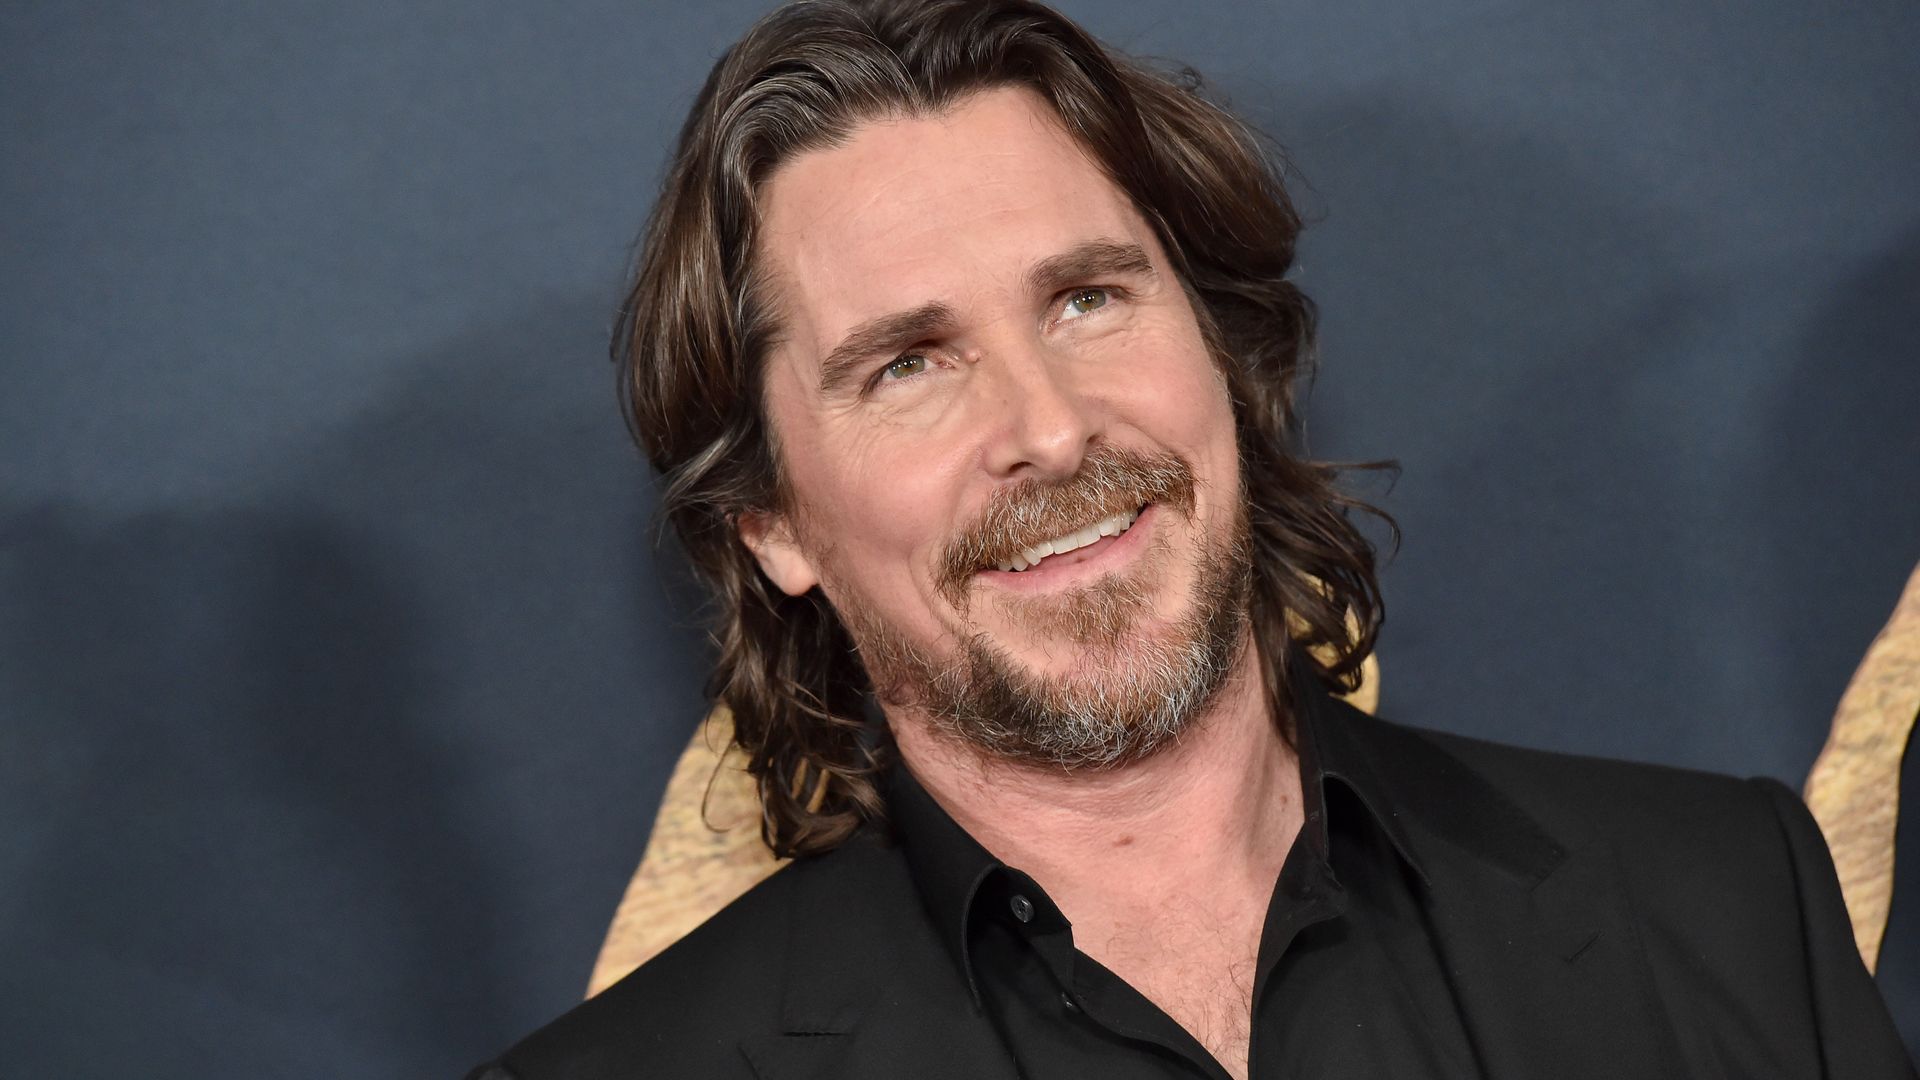 Christian Bale Biography HELLO!